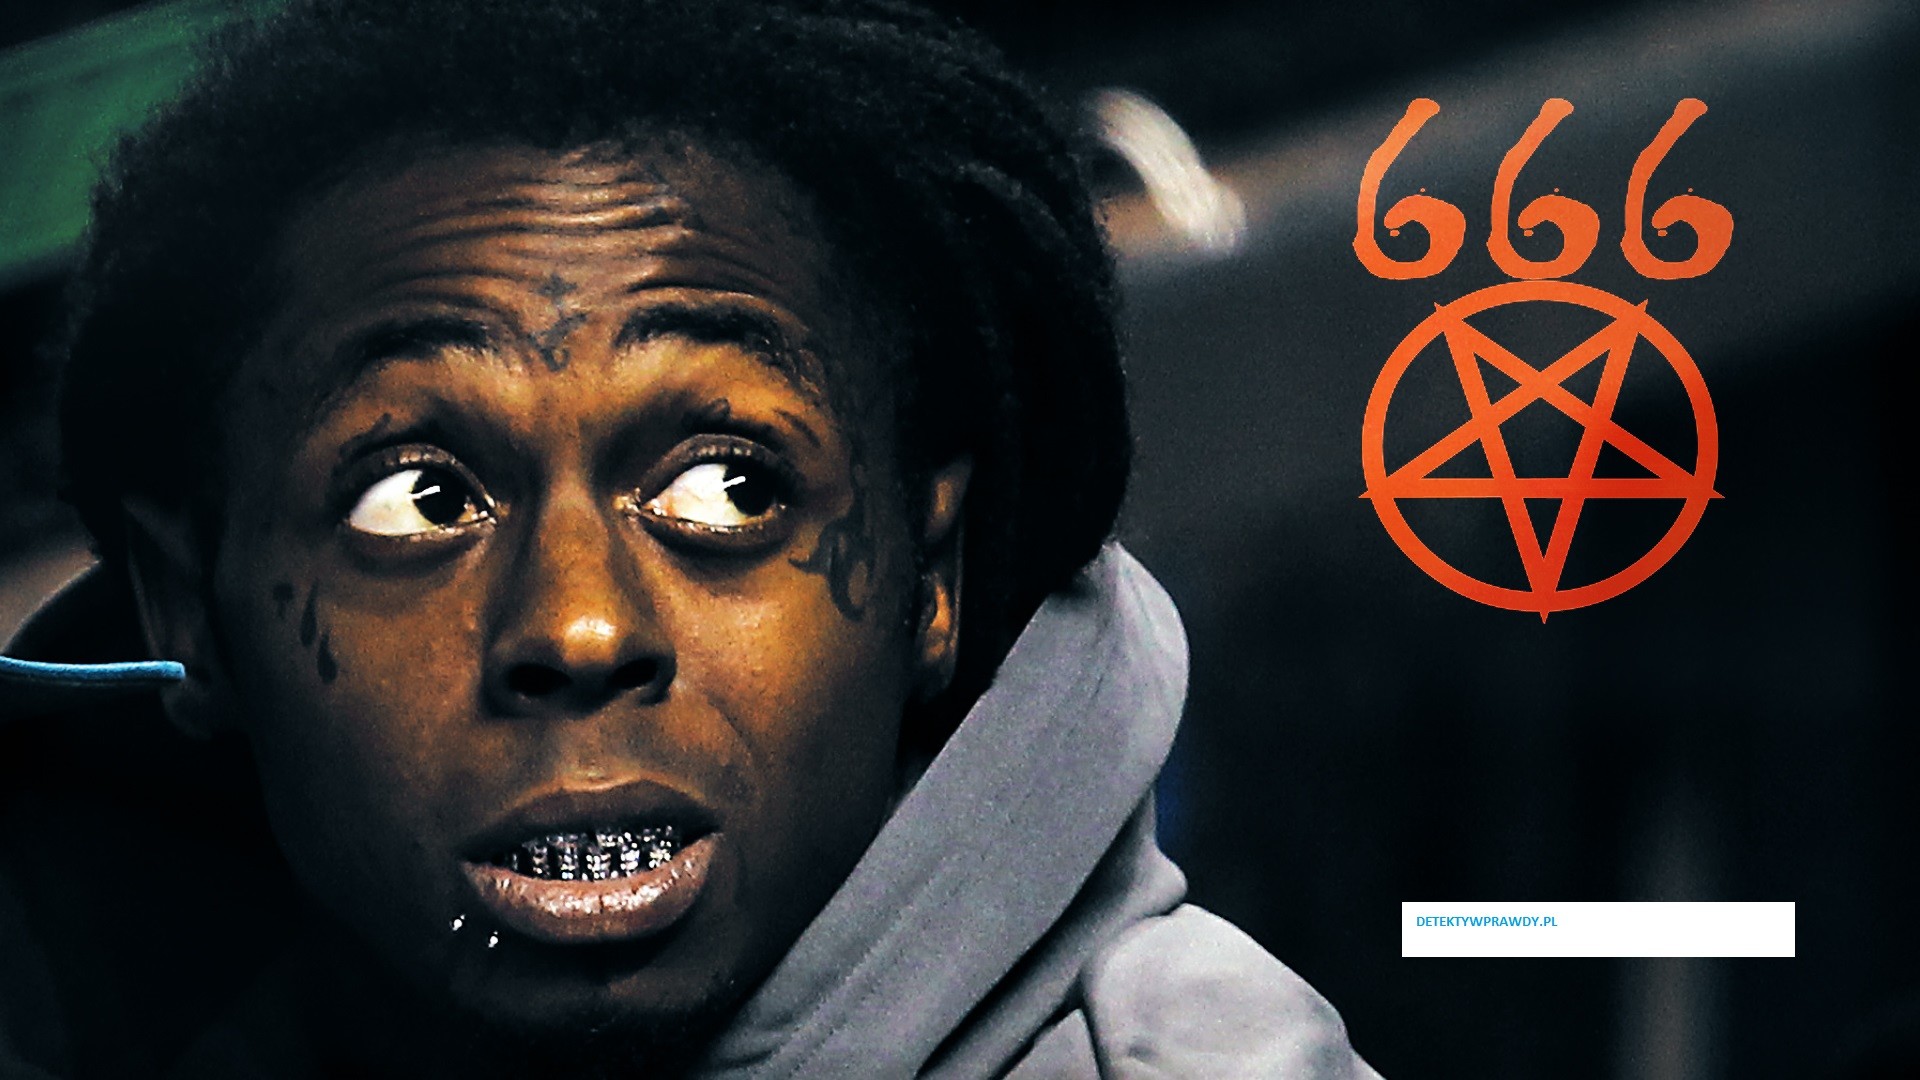 1920x1080 Lil Wayne mÃ³wi, Å¼e Illuminati zmieniÄ Åwiat za znamiÄ Bestii 666